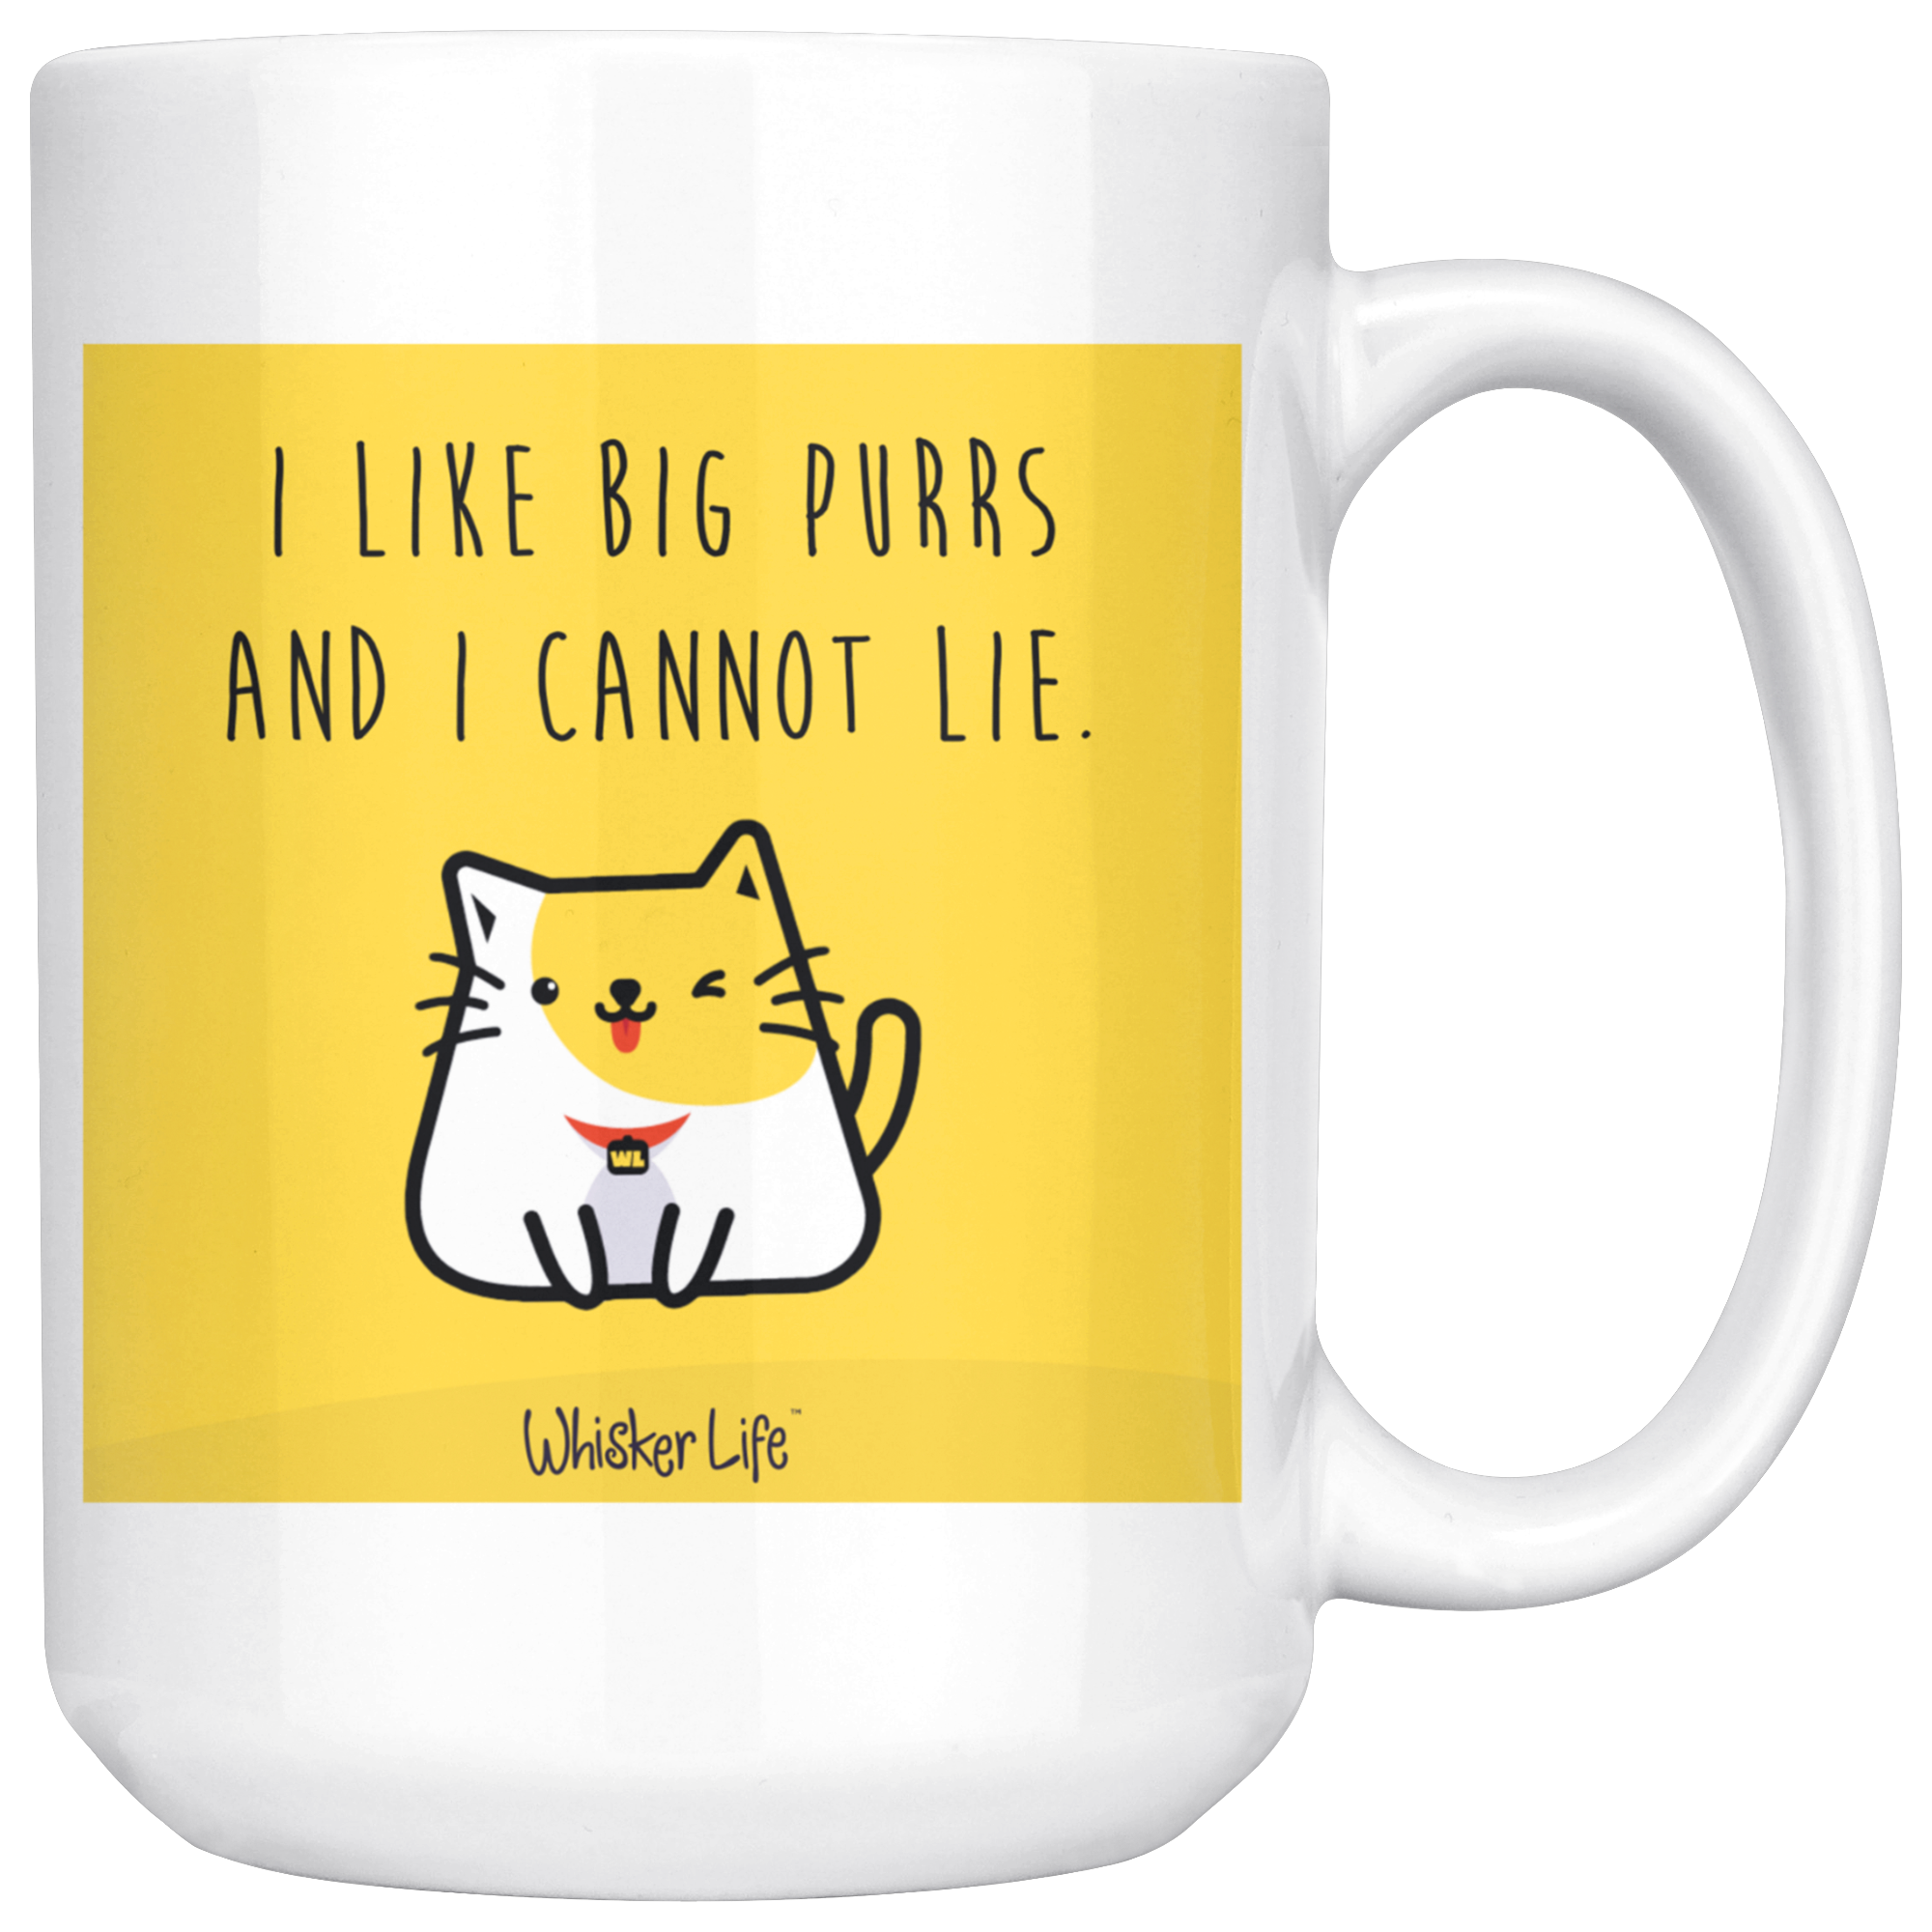 I Like Big Purrs And Cannot Lie - Whisker Life - Large 15 oz Coffee Mug